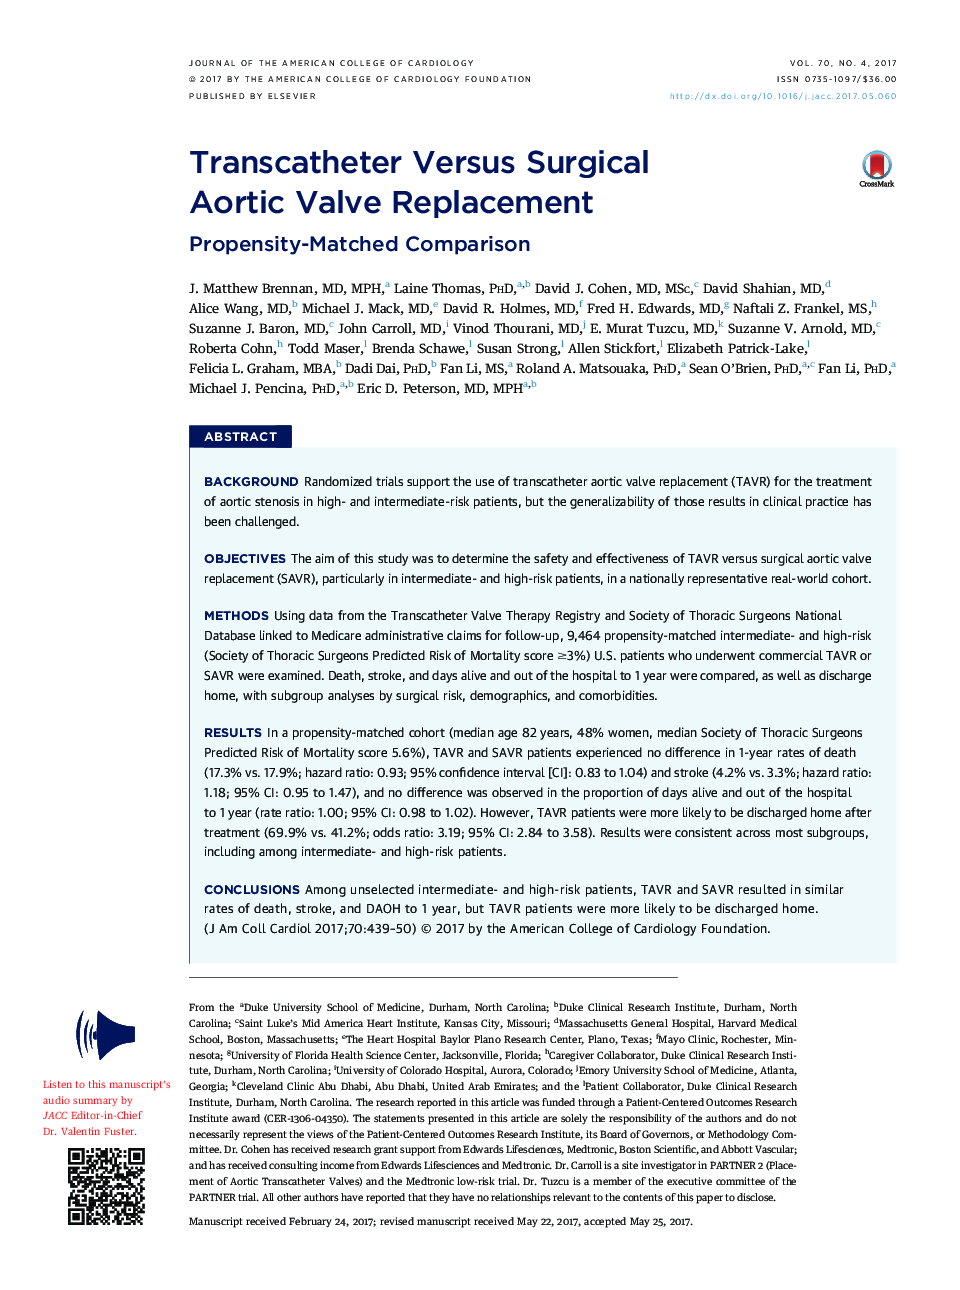 Original InvestigationTranscatheter Versus Surgical AorticÂ ValveÂ Replacement: Propensity-Matched Comparison